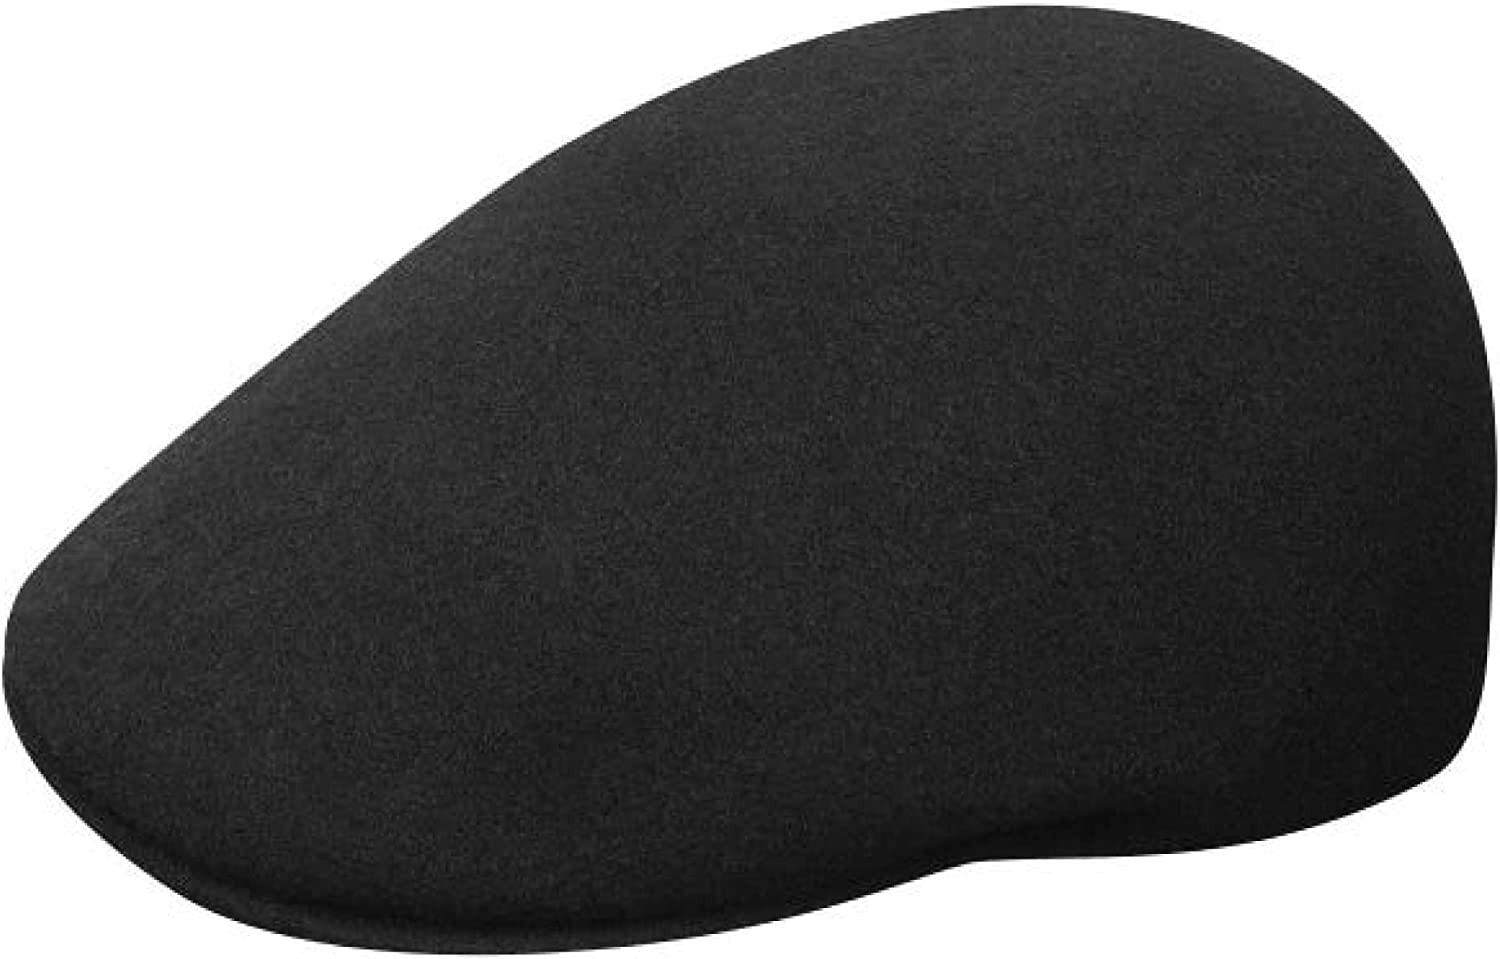 Kangol Seamless Wool 507 Felt Hat for Men and Women - Black/Gold - L